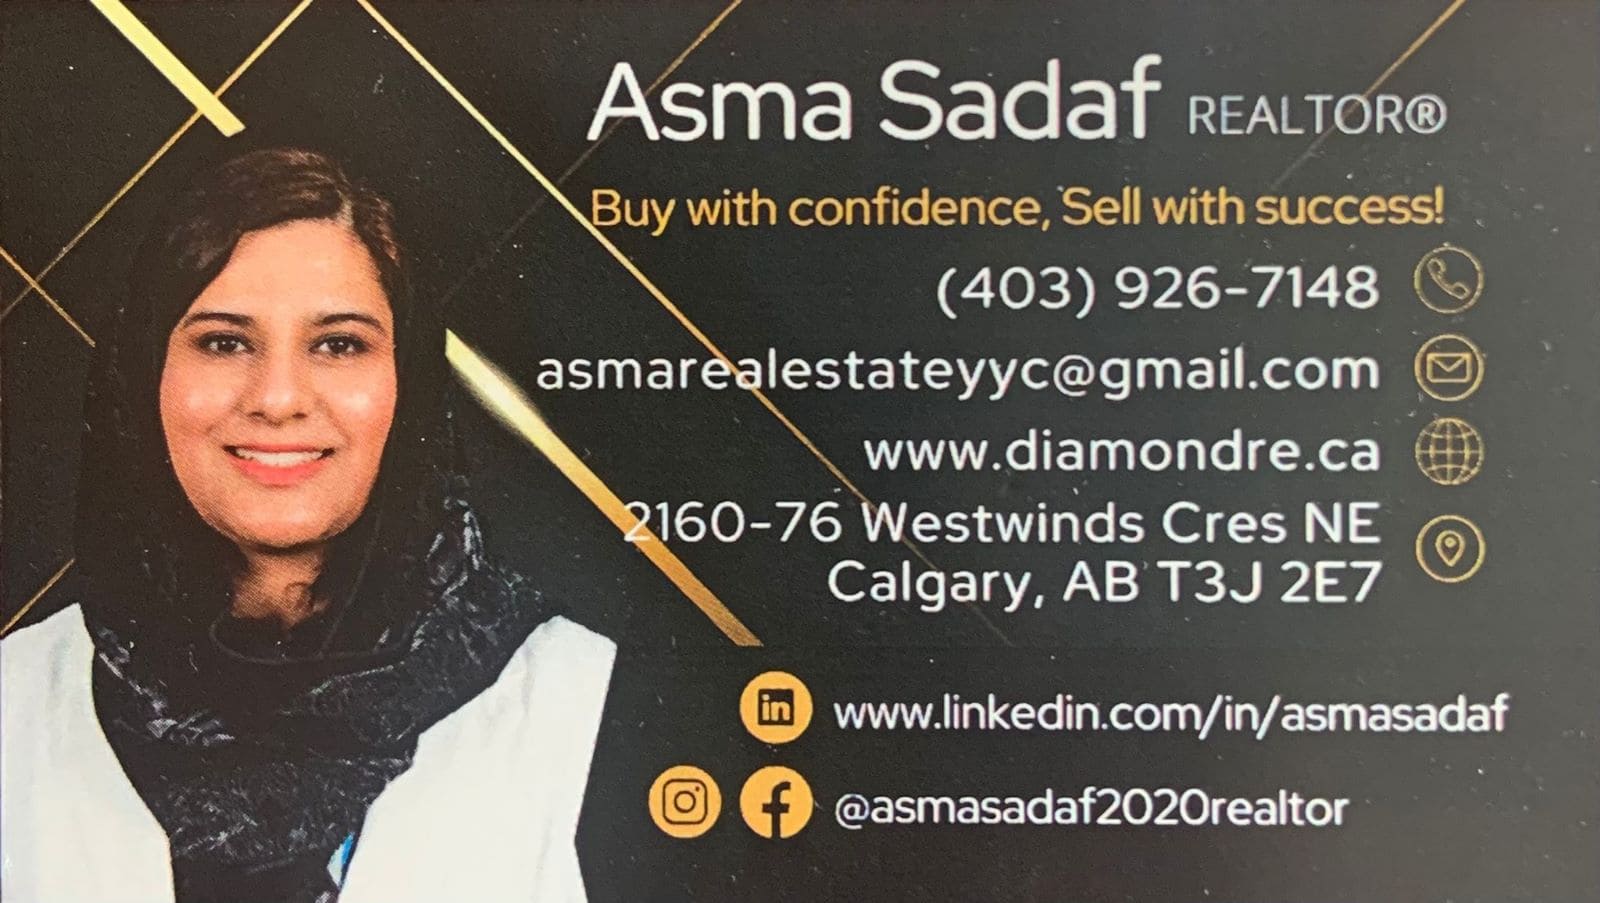 Asma Sadaf Realtor and Financial Professional